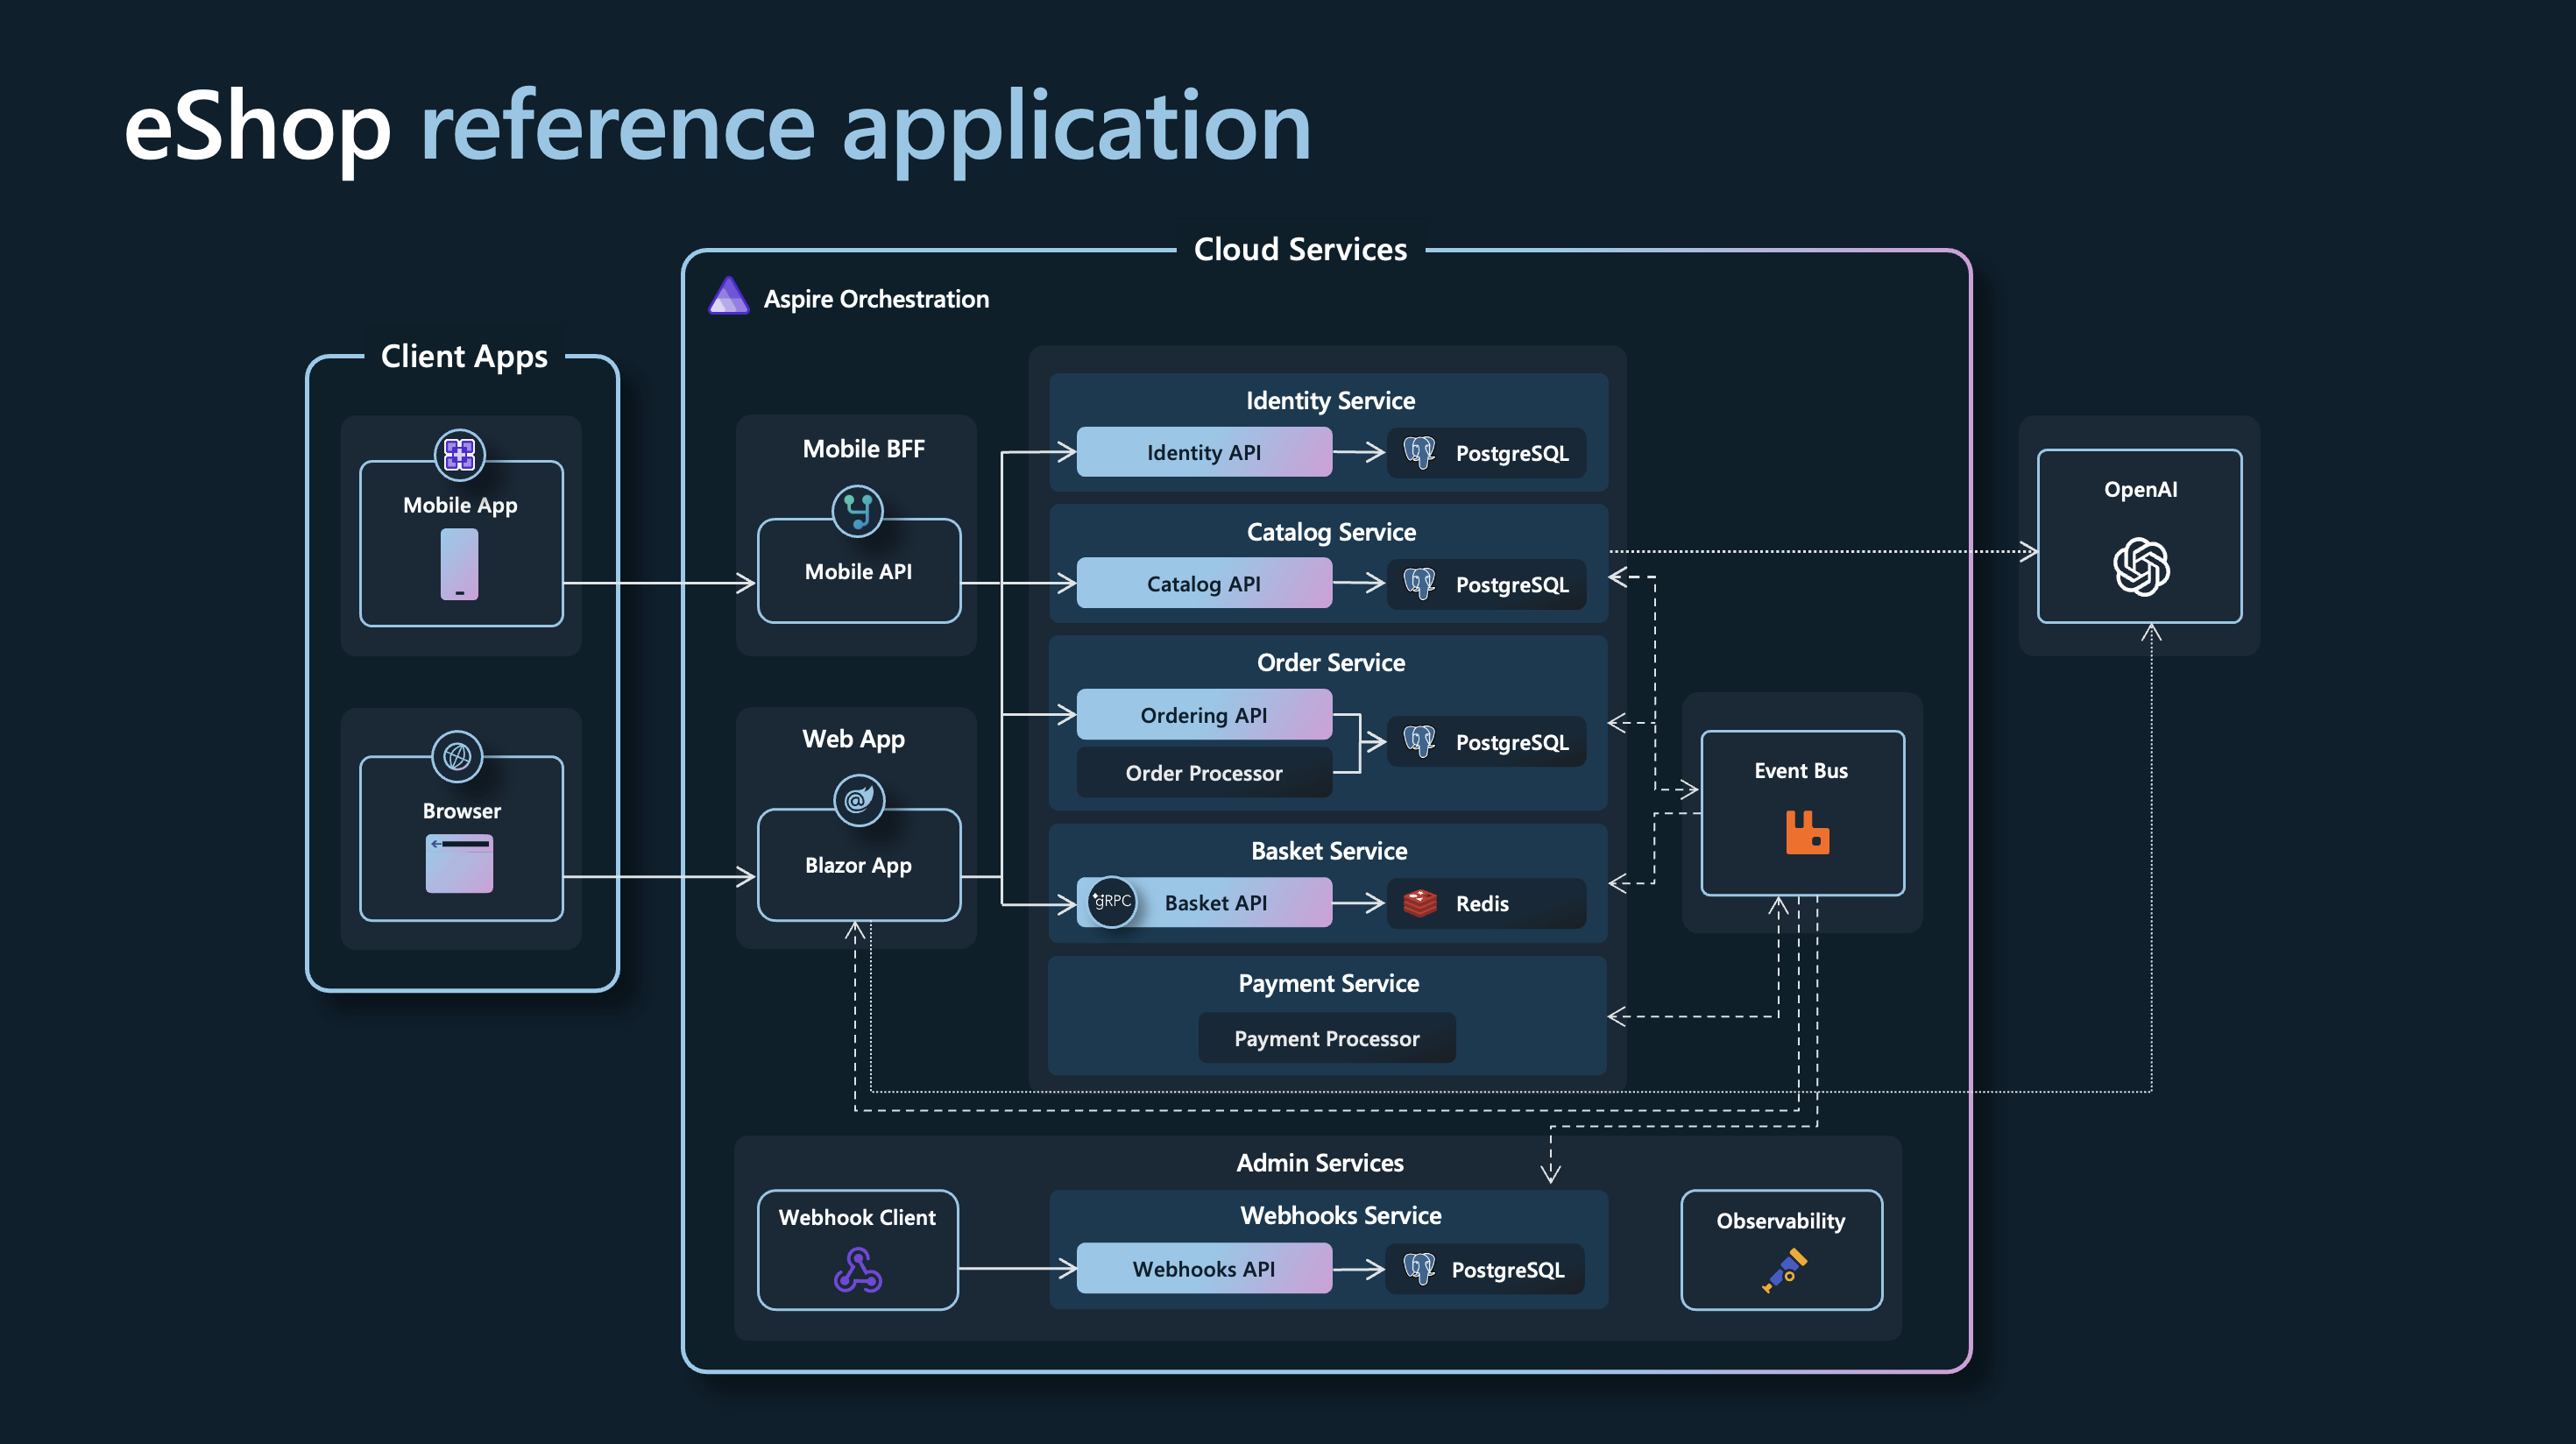 eShop Reference Application architecture diagram